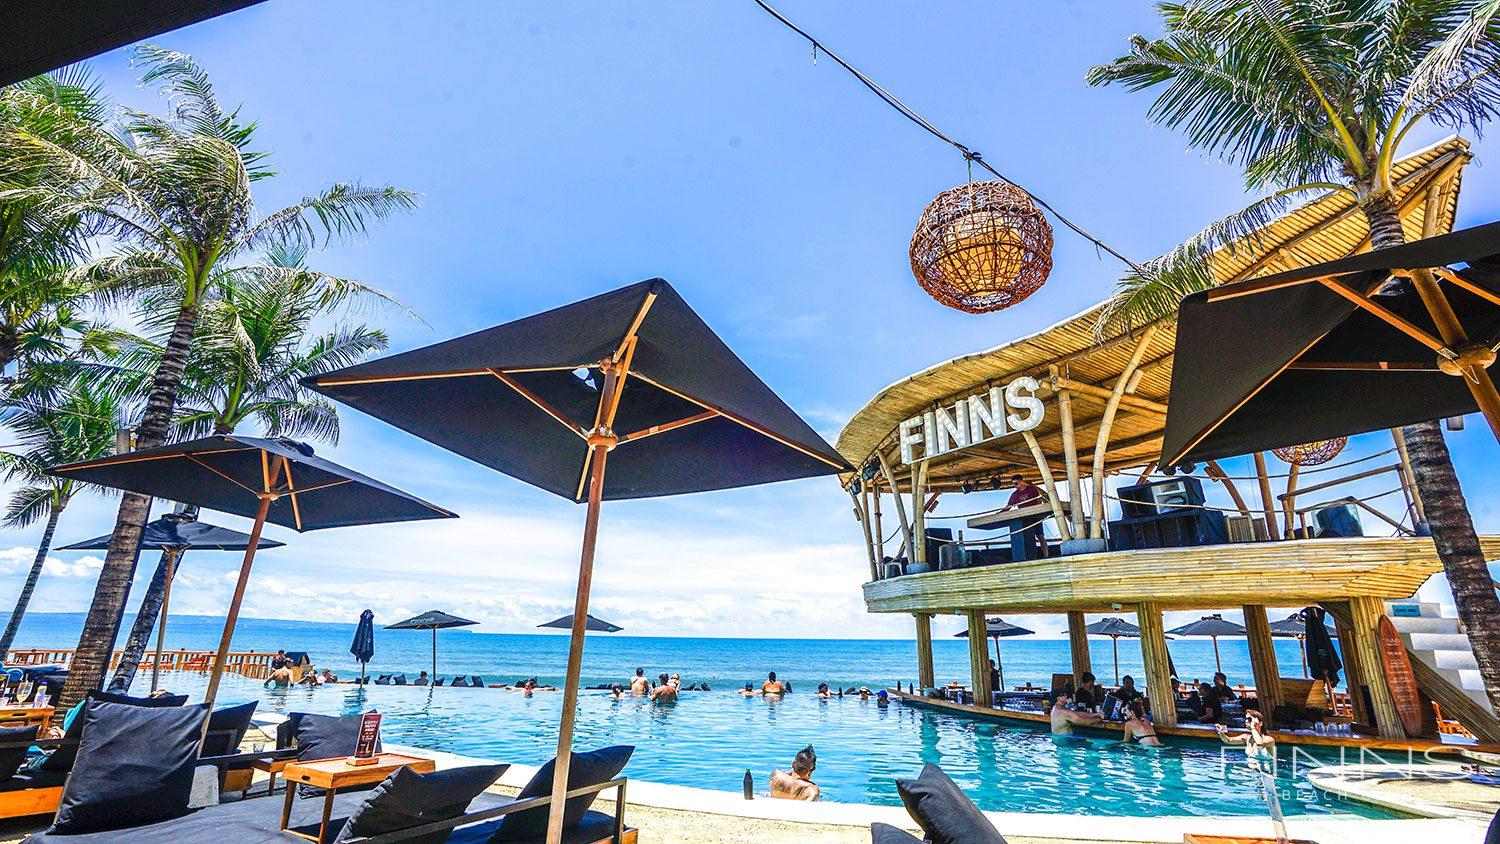 Finns Beach Club - Pool & DJ Booth